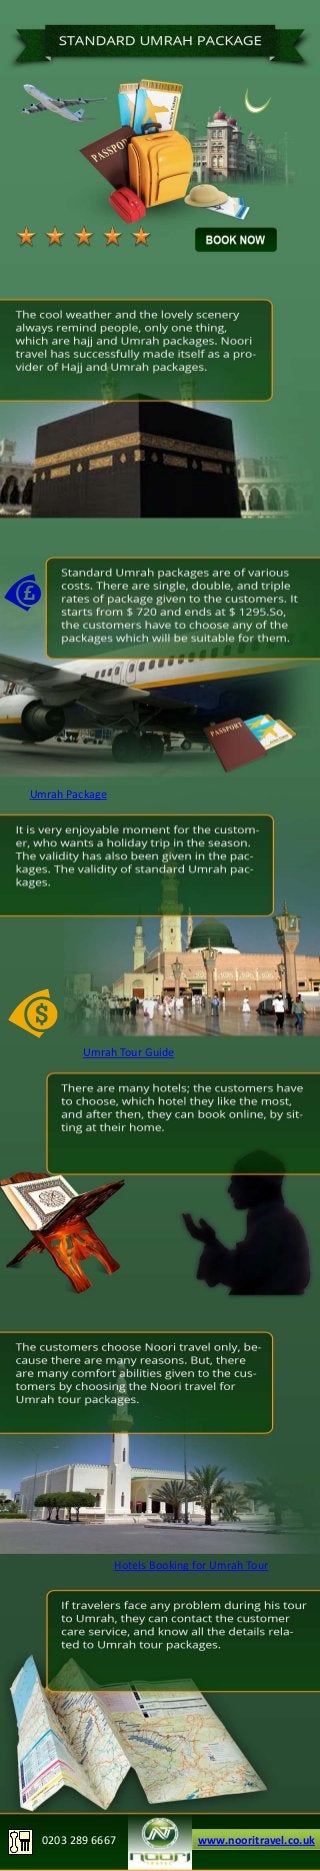 Umrah Package

Umrah Tour Guide

Hotels Booking for Umrah Tour

0203 289 6667

www.nooritravel.co.uk

 